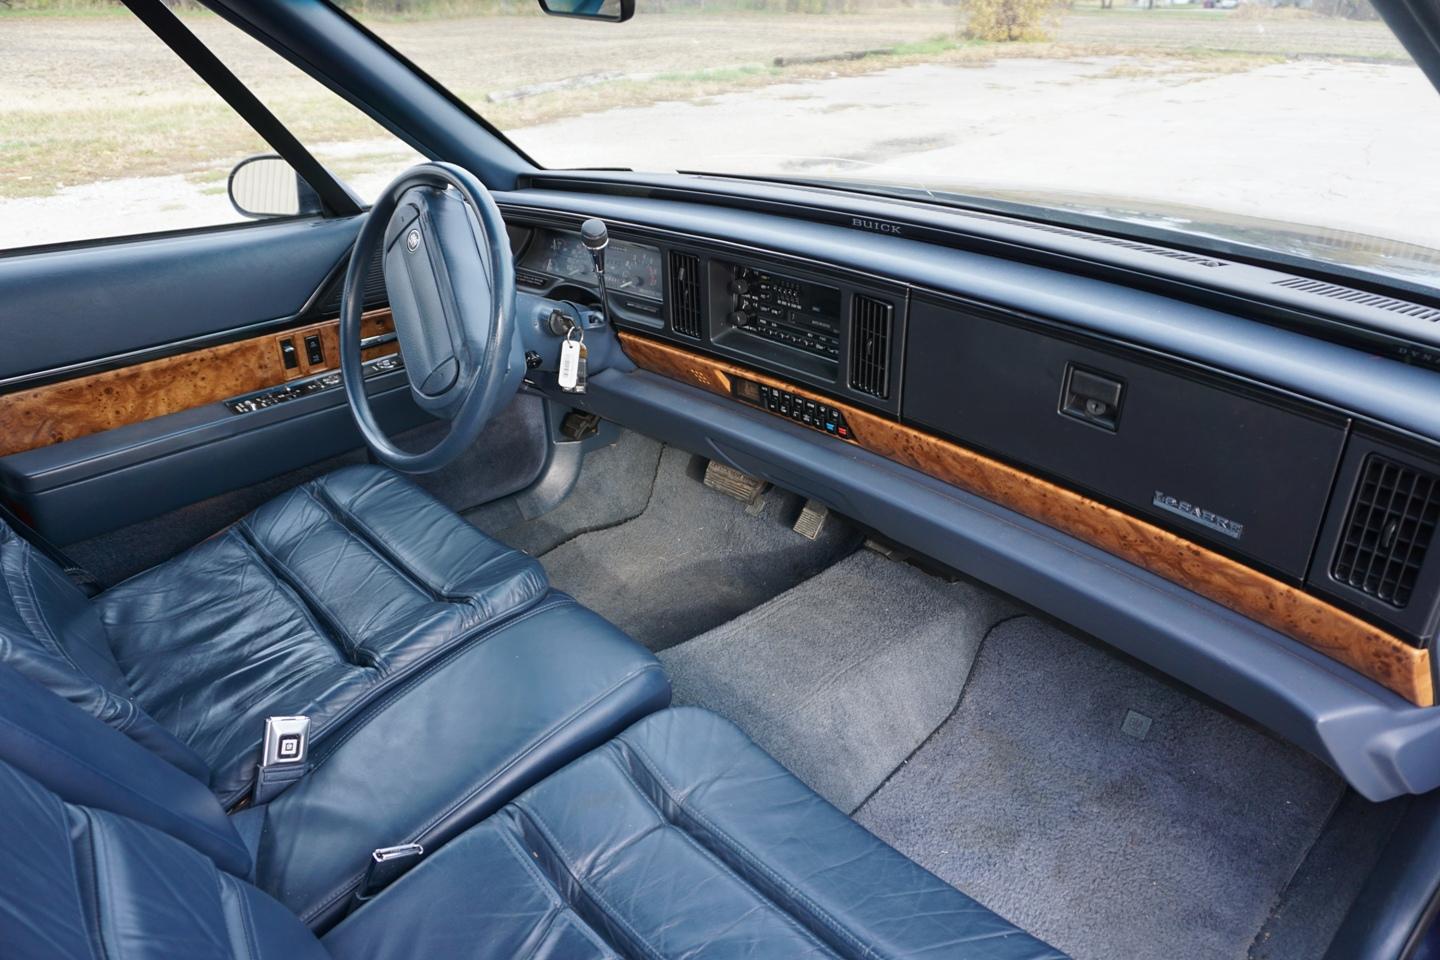 1993 Buick LeSabre Limited (FWD) 4 Door Sedan, VIN #1G4HR53L1PH502969, Gas Engine, Automatic Transmi